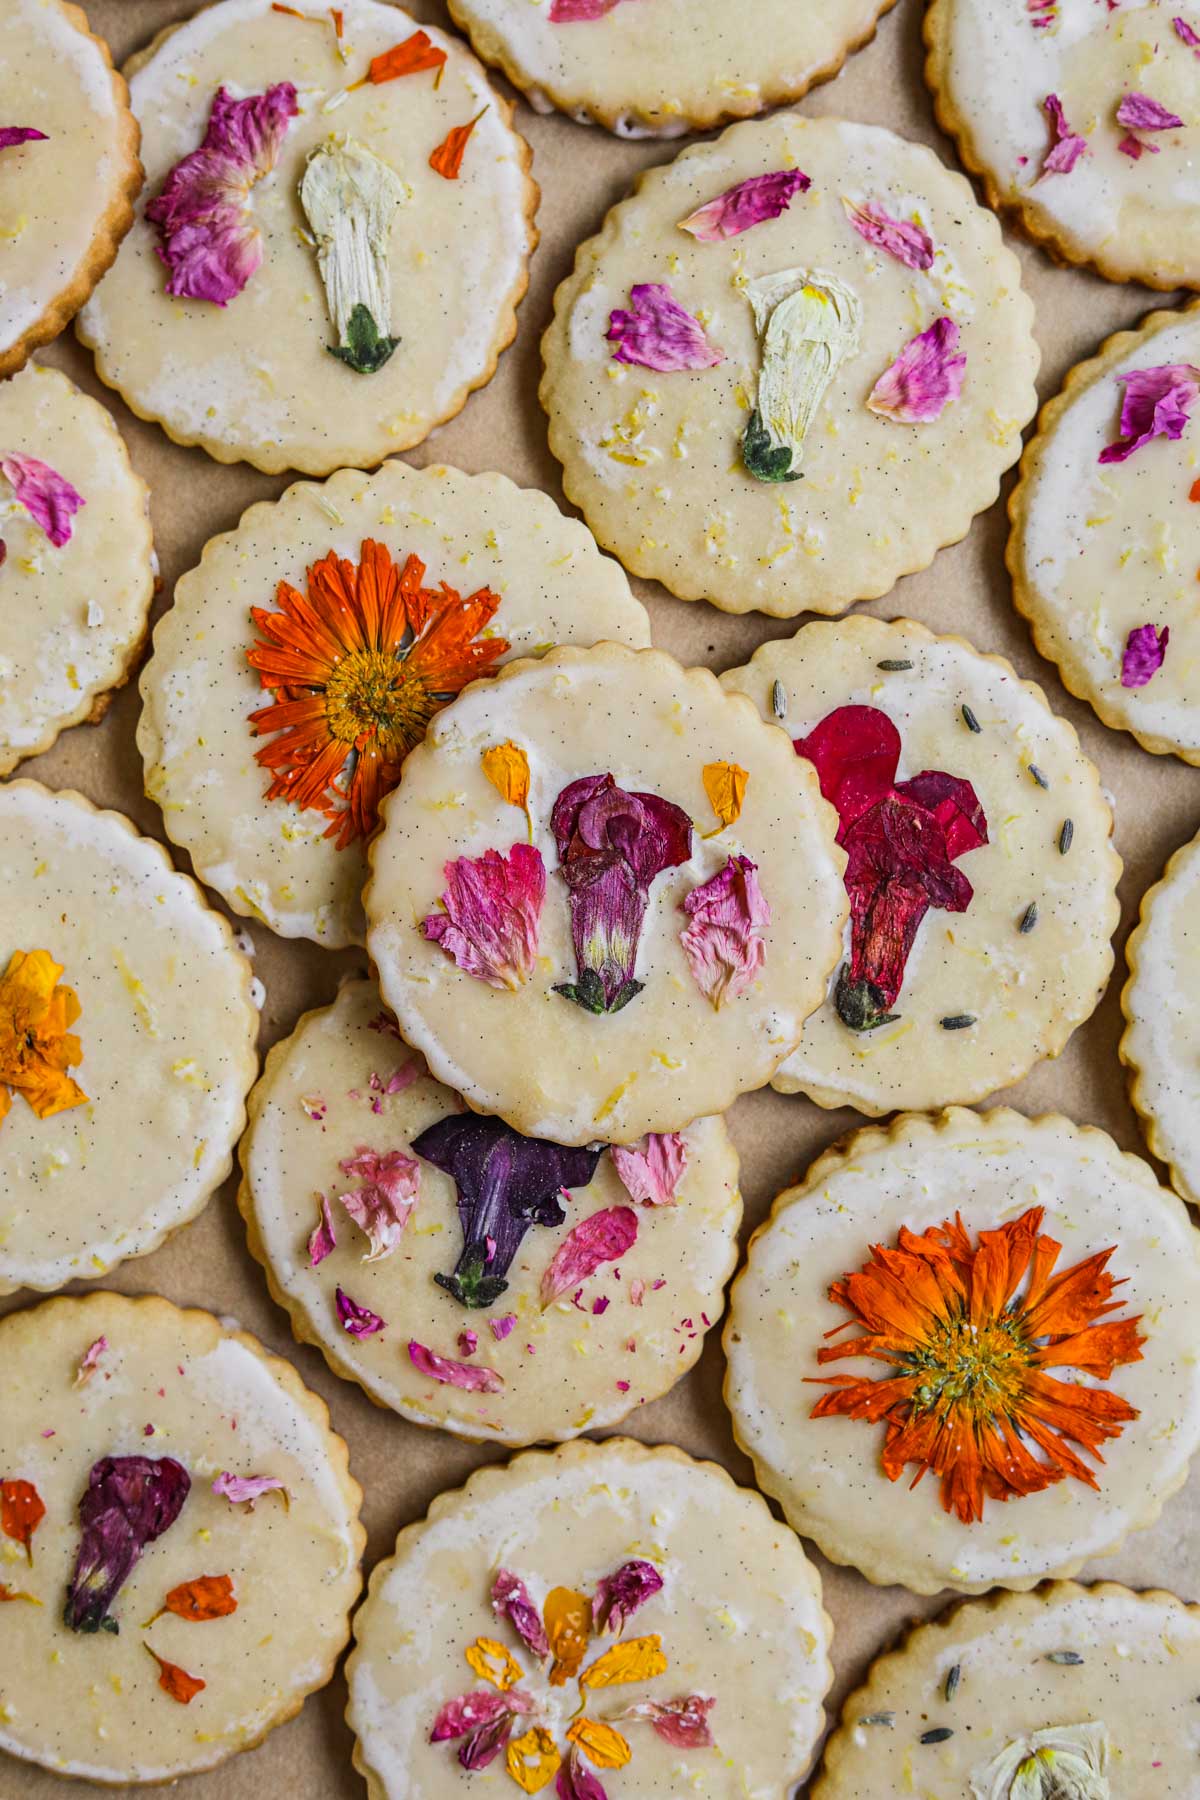 Colorful edible flower shortbread cookies.